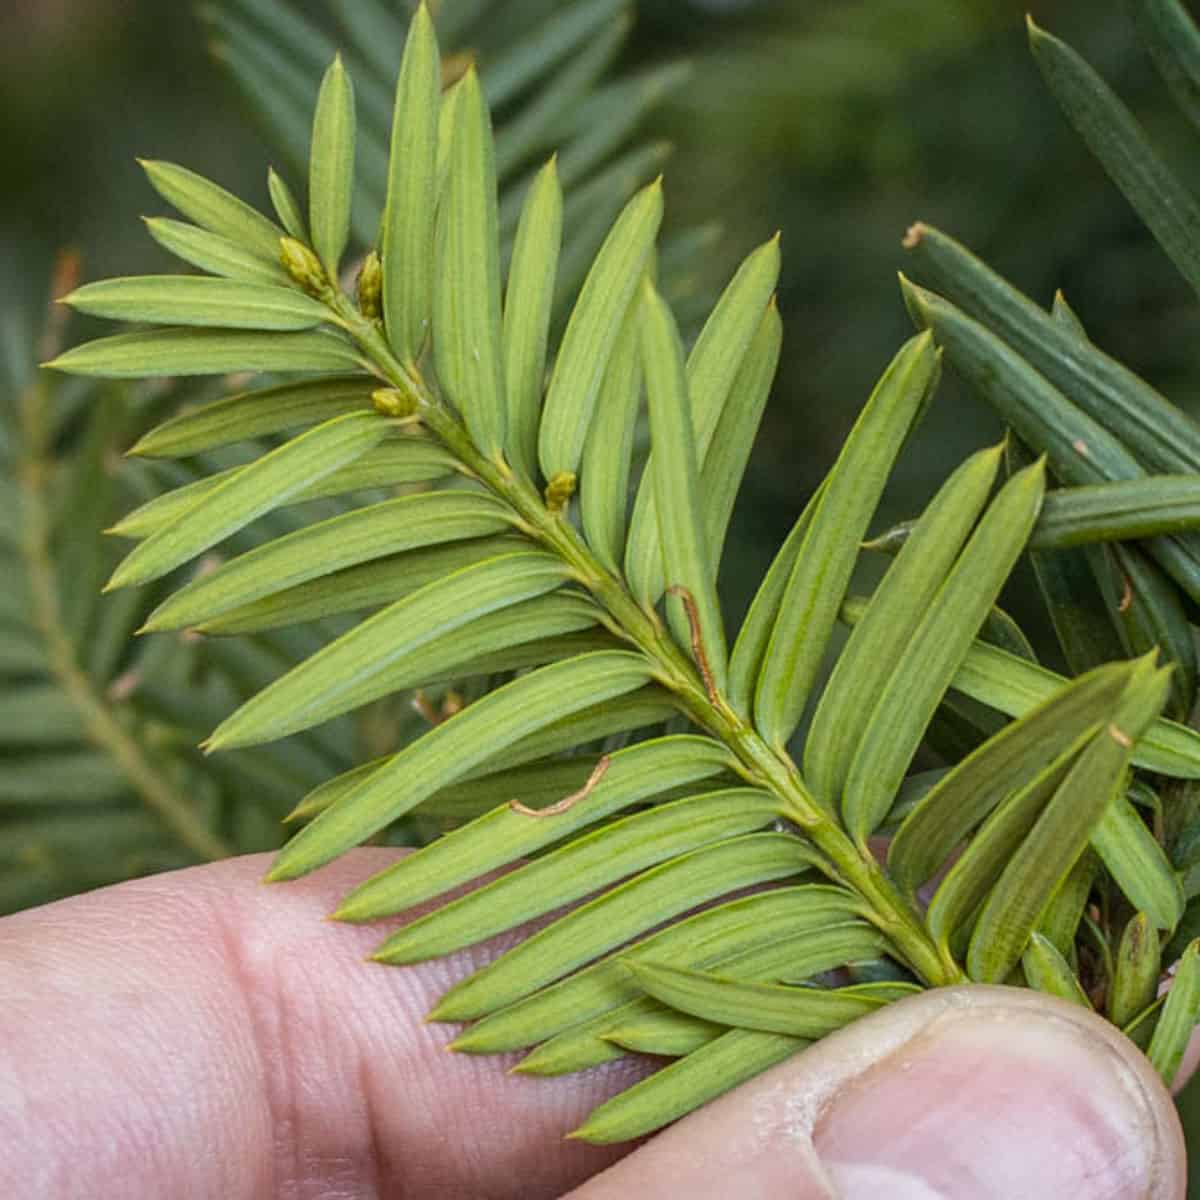 Poisonous yew tips underside